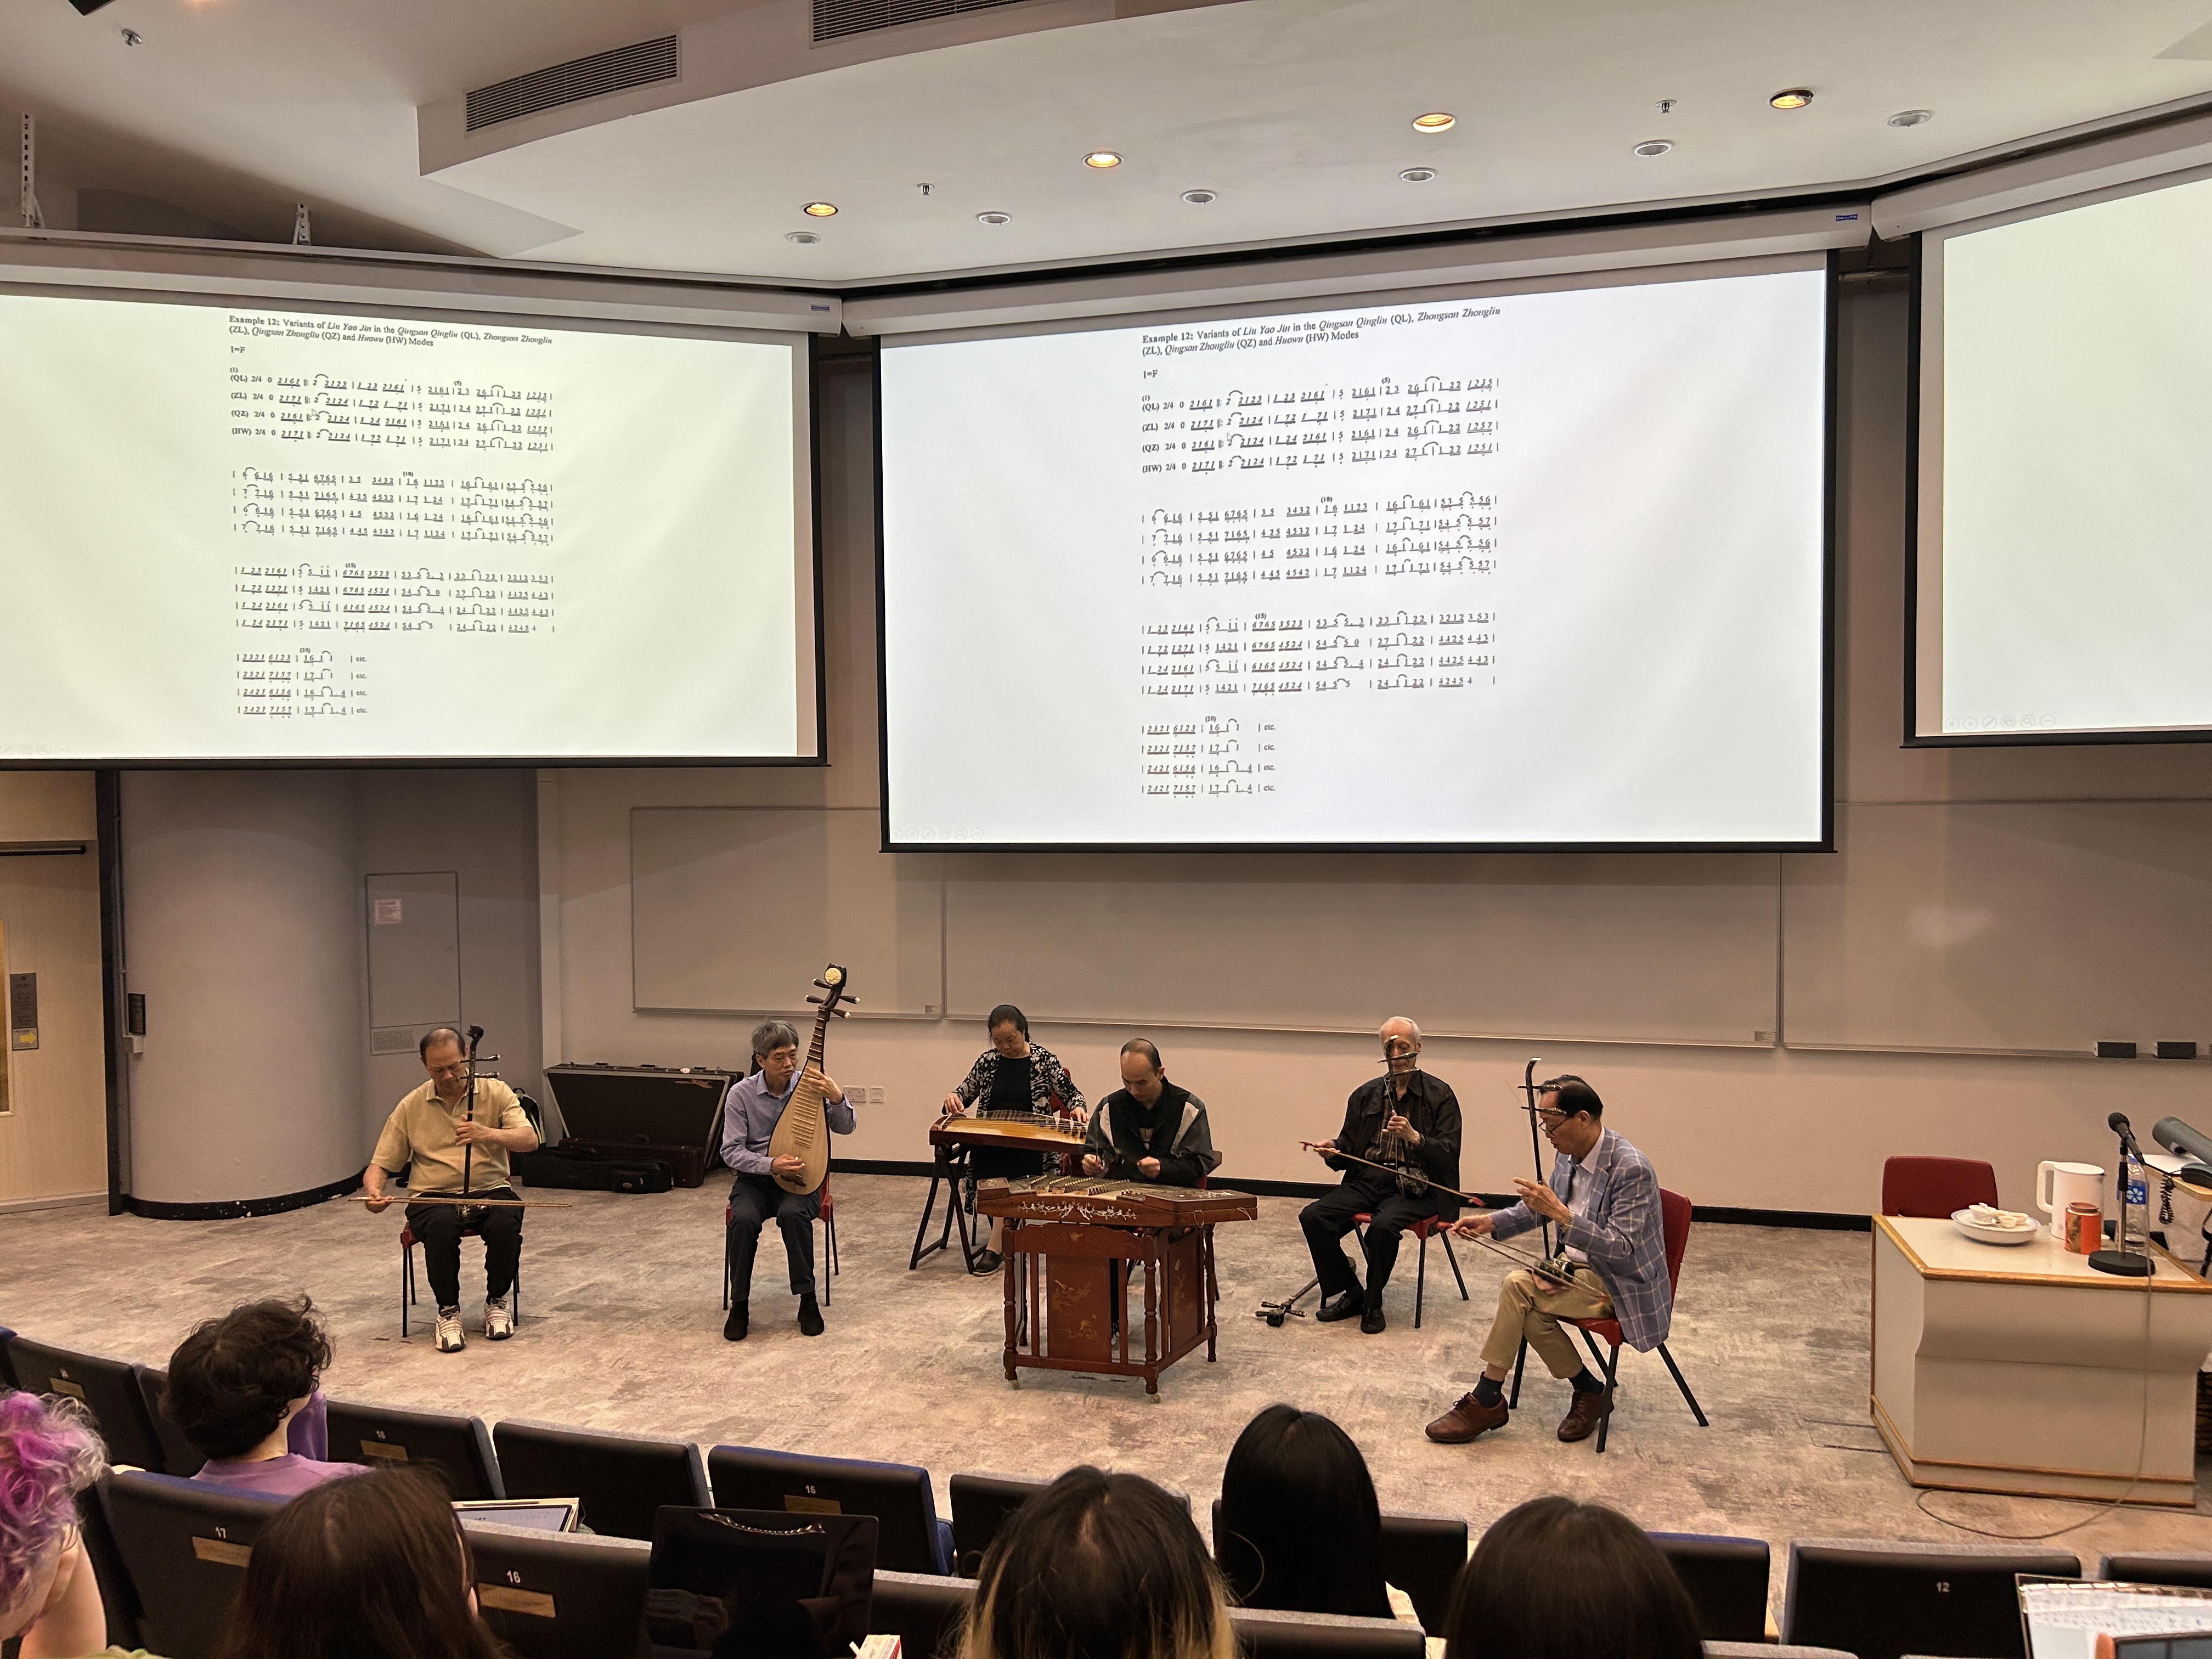 逸響潮樂演奏組 ：樂器演奏示範與討論 Yi Xiang Chaozhou Music Ensemble: Instrument Demonstration and Discussion